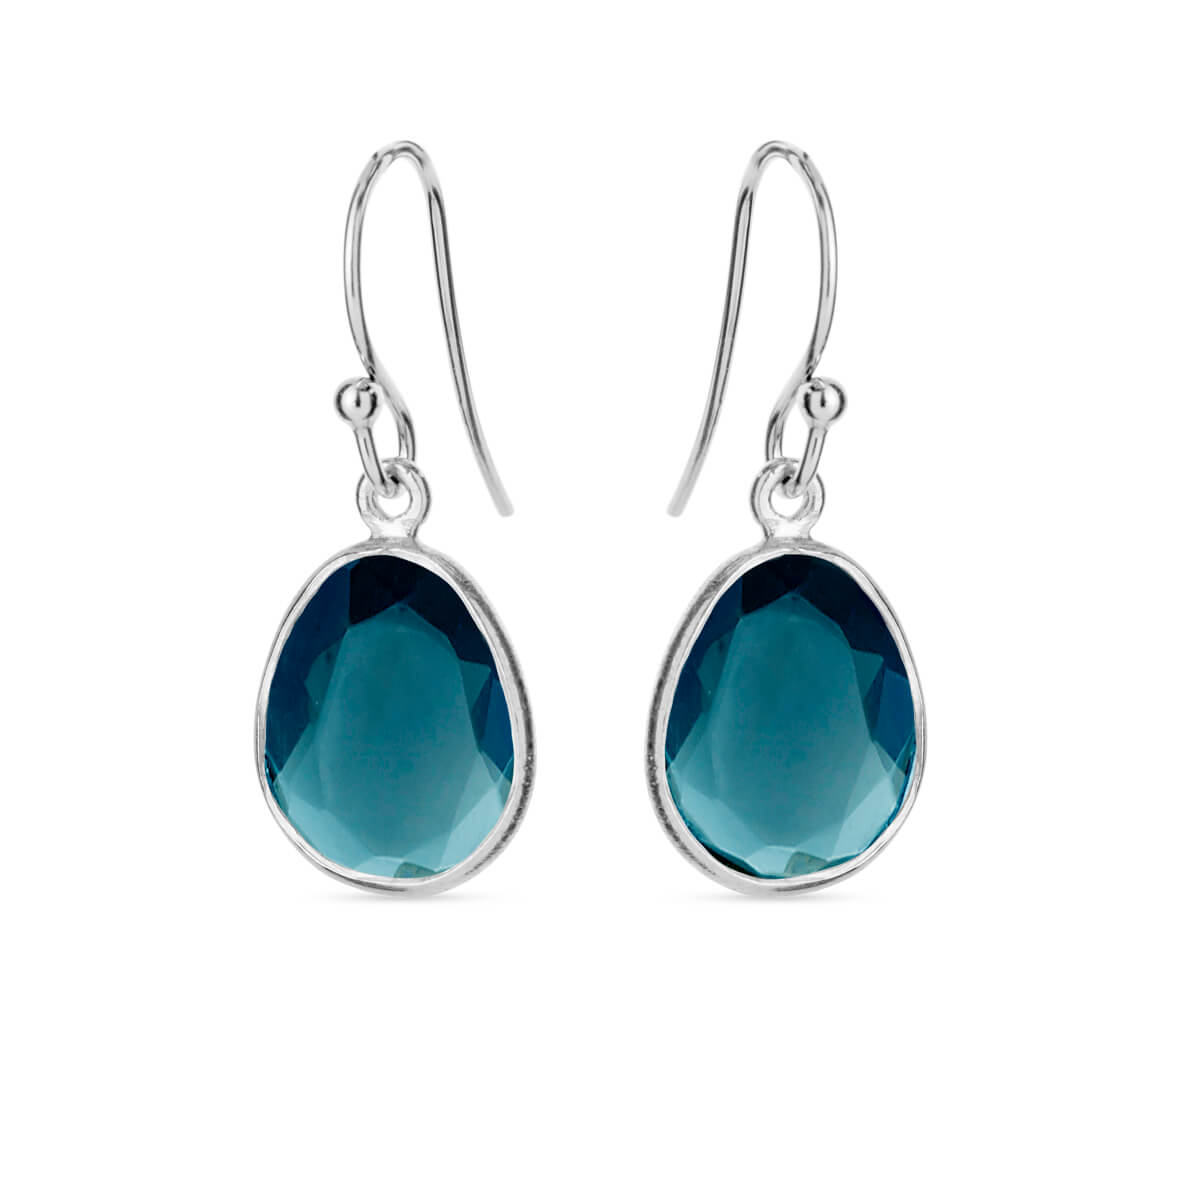 Earrings in silver with london blue crystal - Susanne Friis Bjørner ...